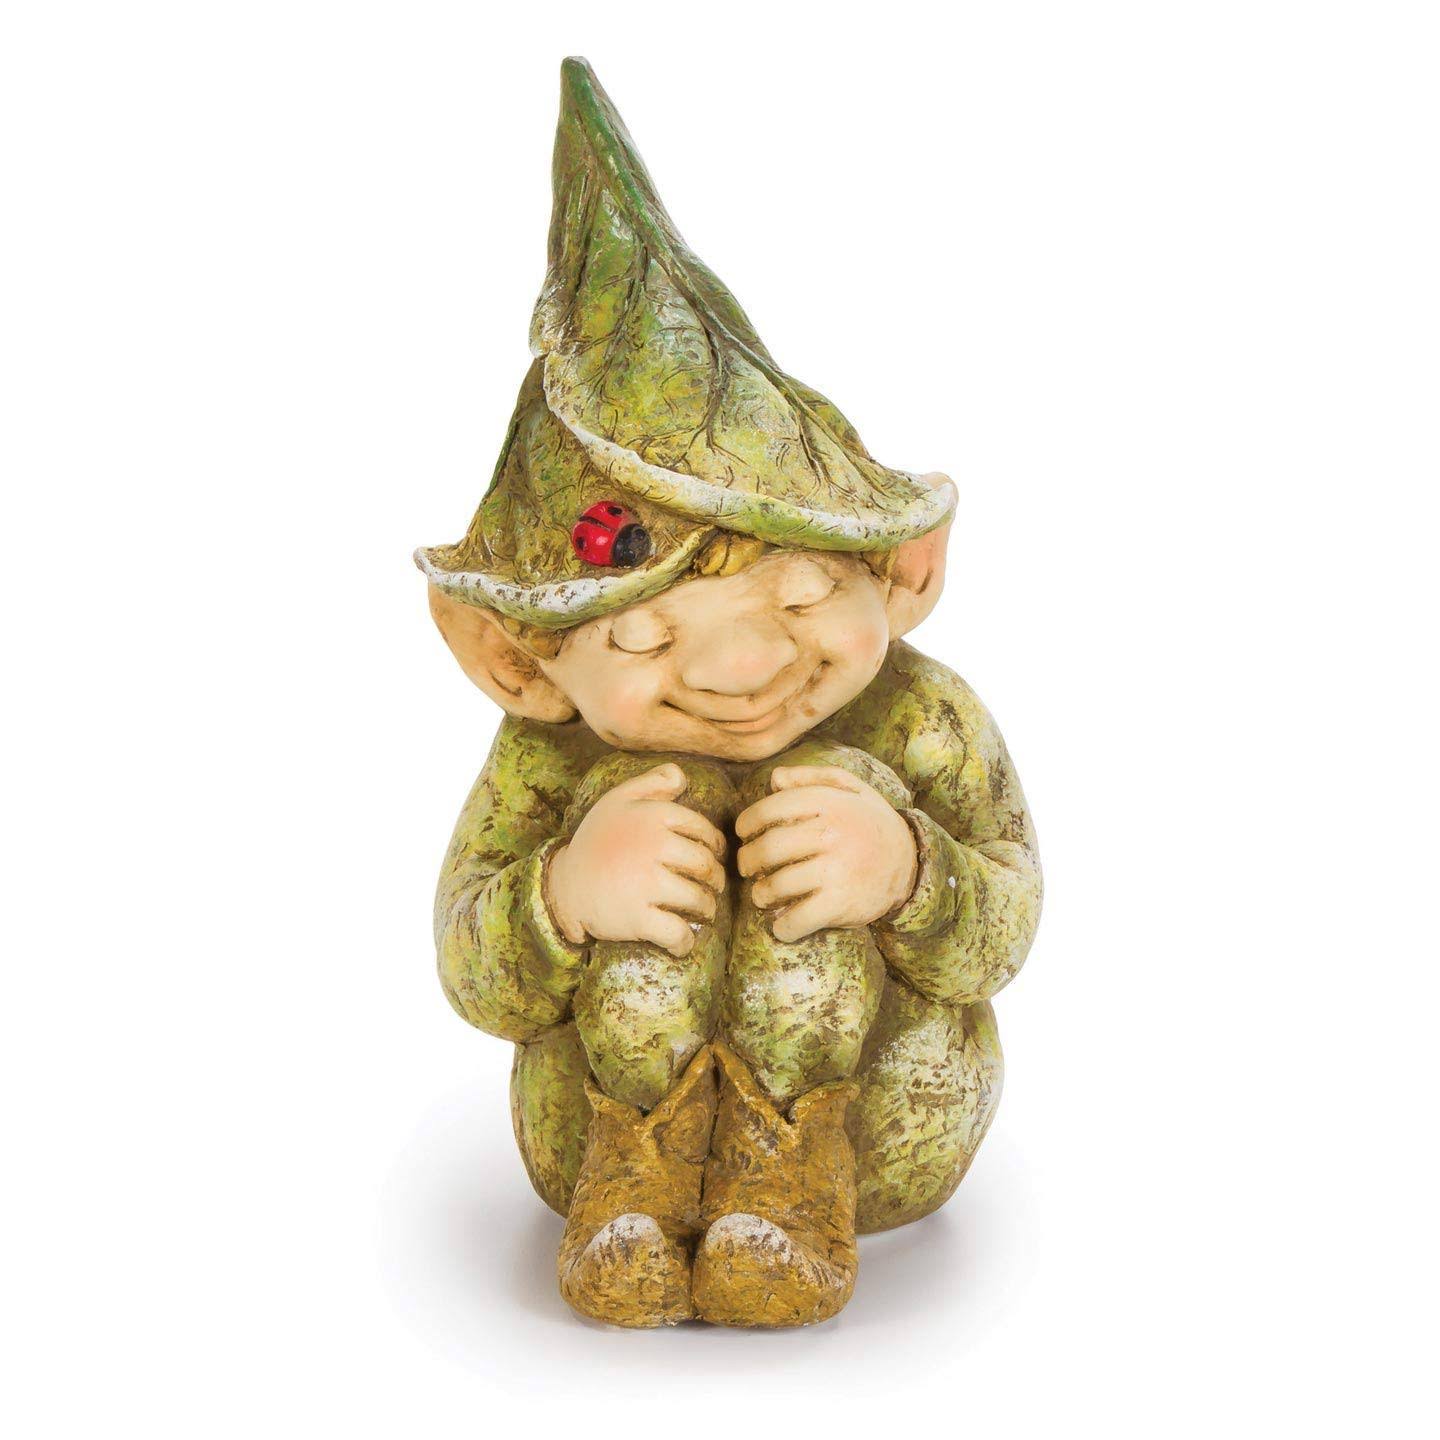 Darice Sitting Garden Gnome, 14 Inches